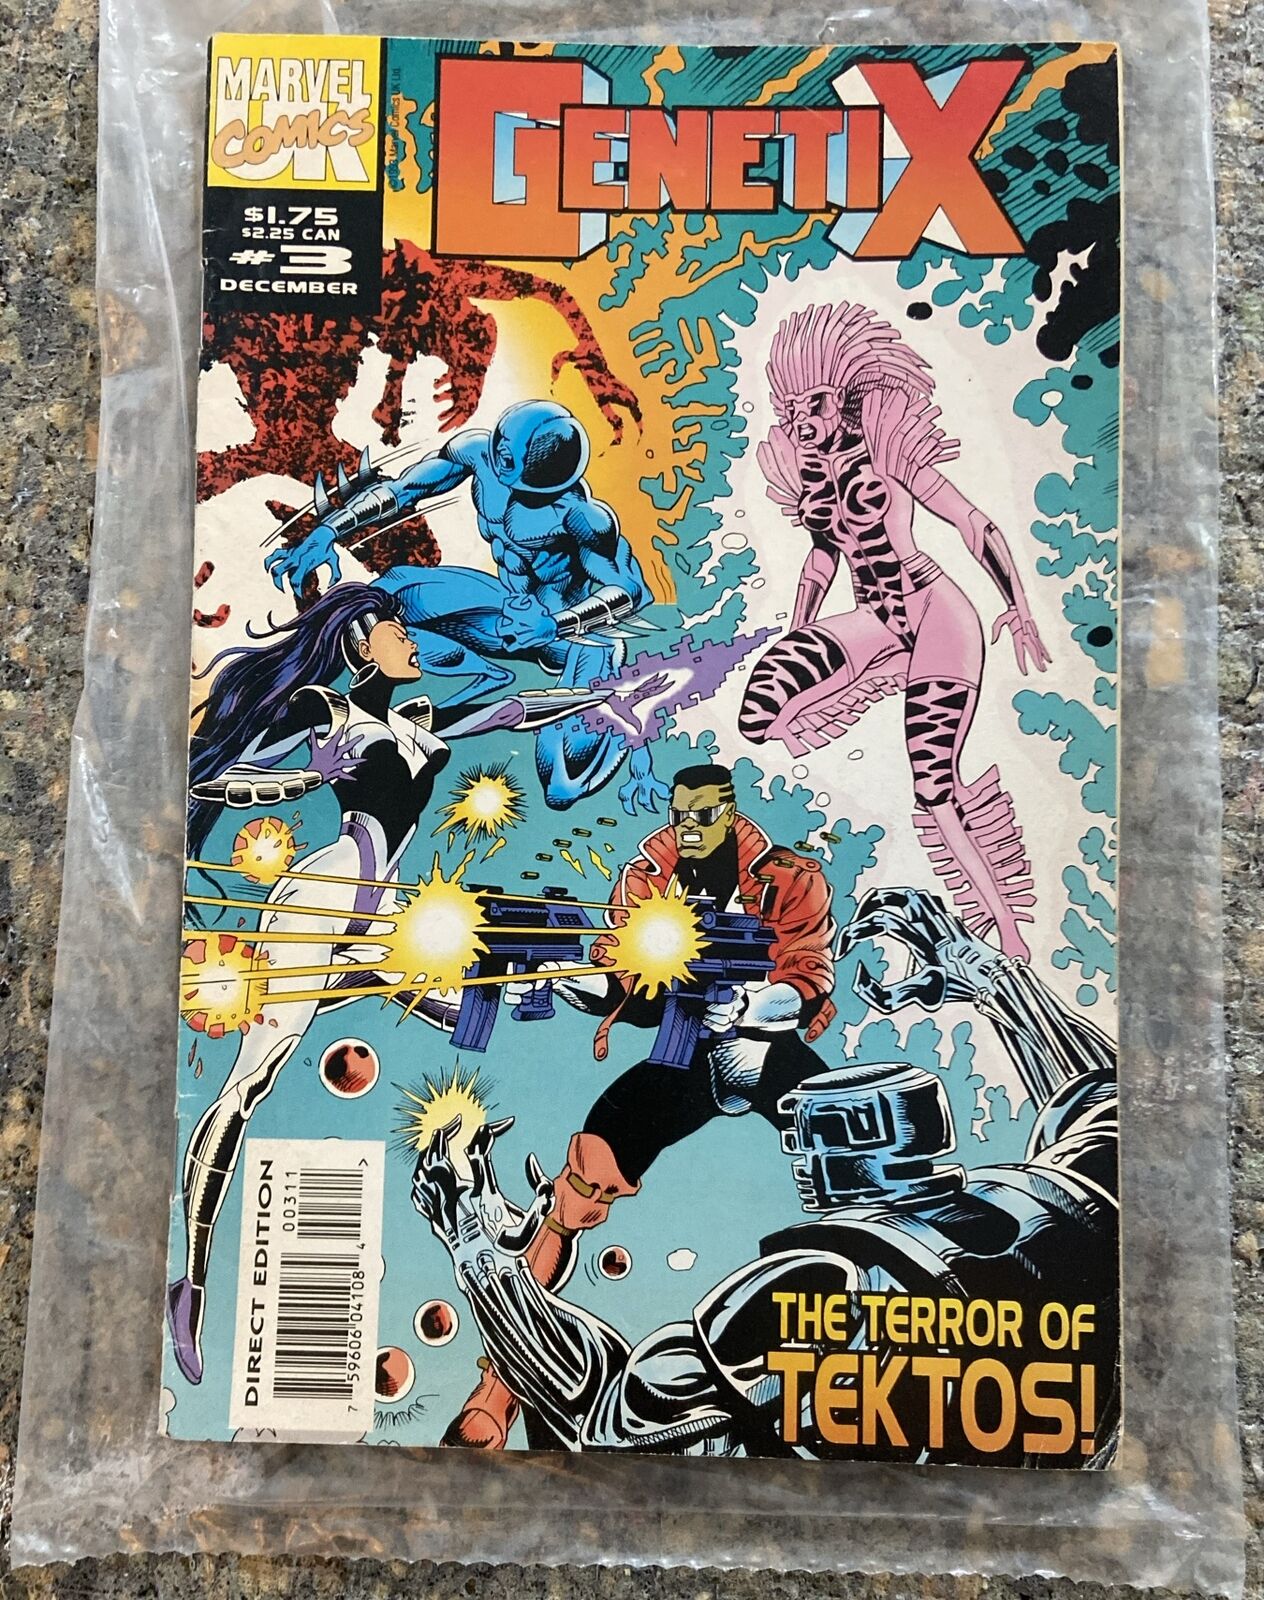 Genetix #3 (Marvel, December 1993)